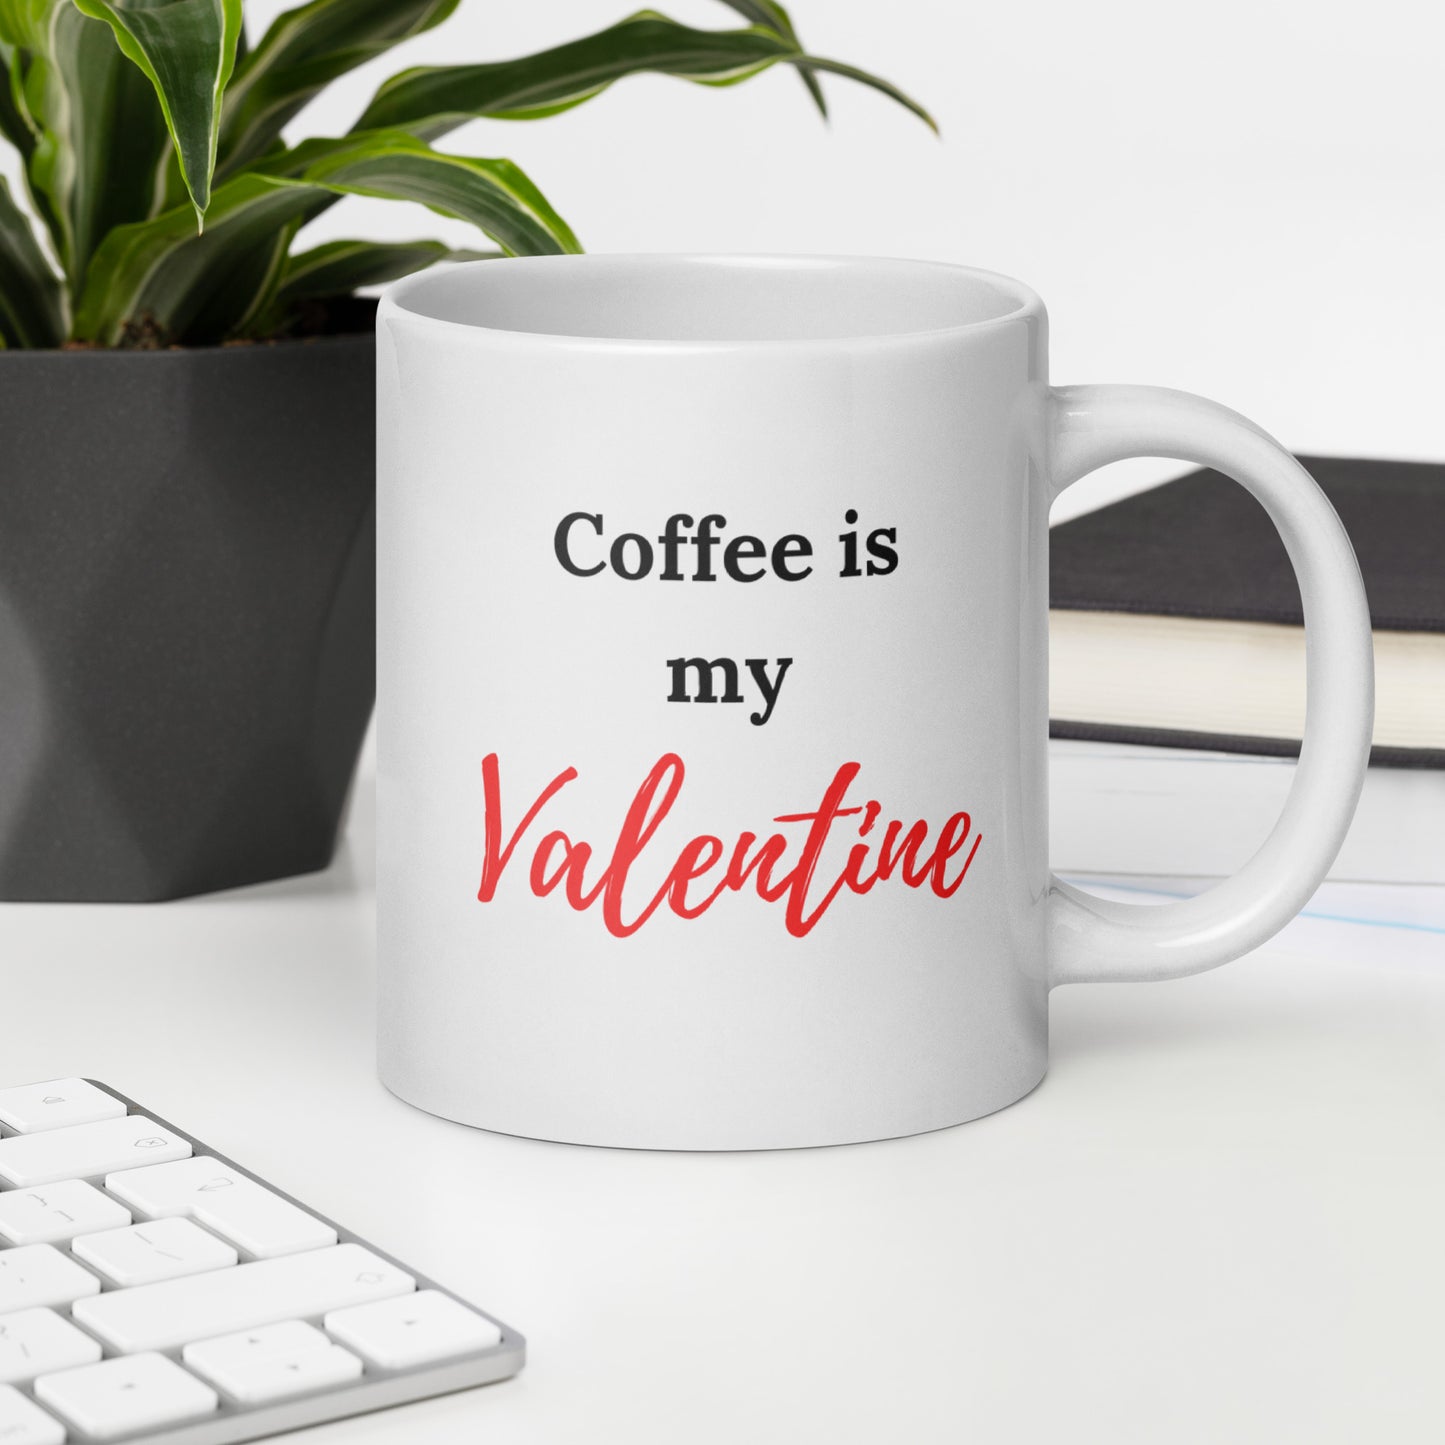 Coffee is My Valentine Coffee Mug, Anti Valentine Gift, Single Valentine Mug, Funny Valentine, Funny Valentine Gift, Anti Valentine's Day